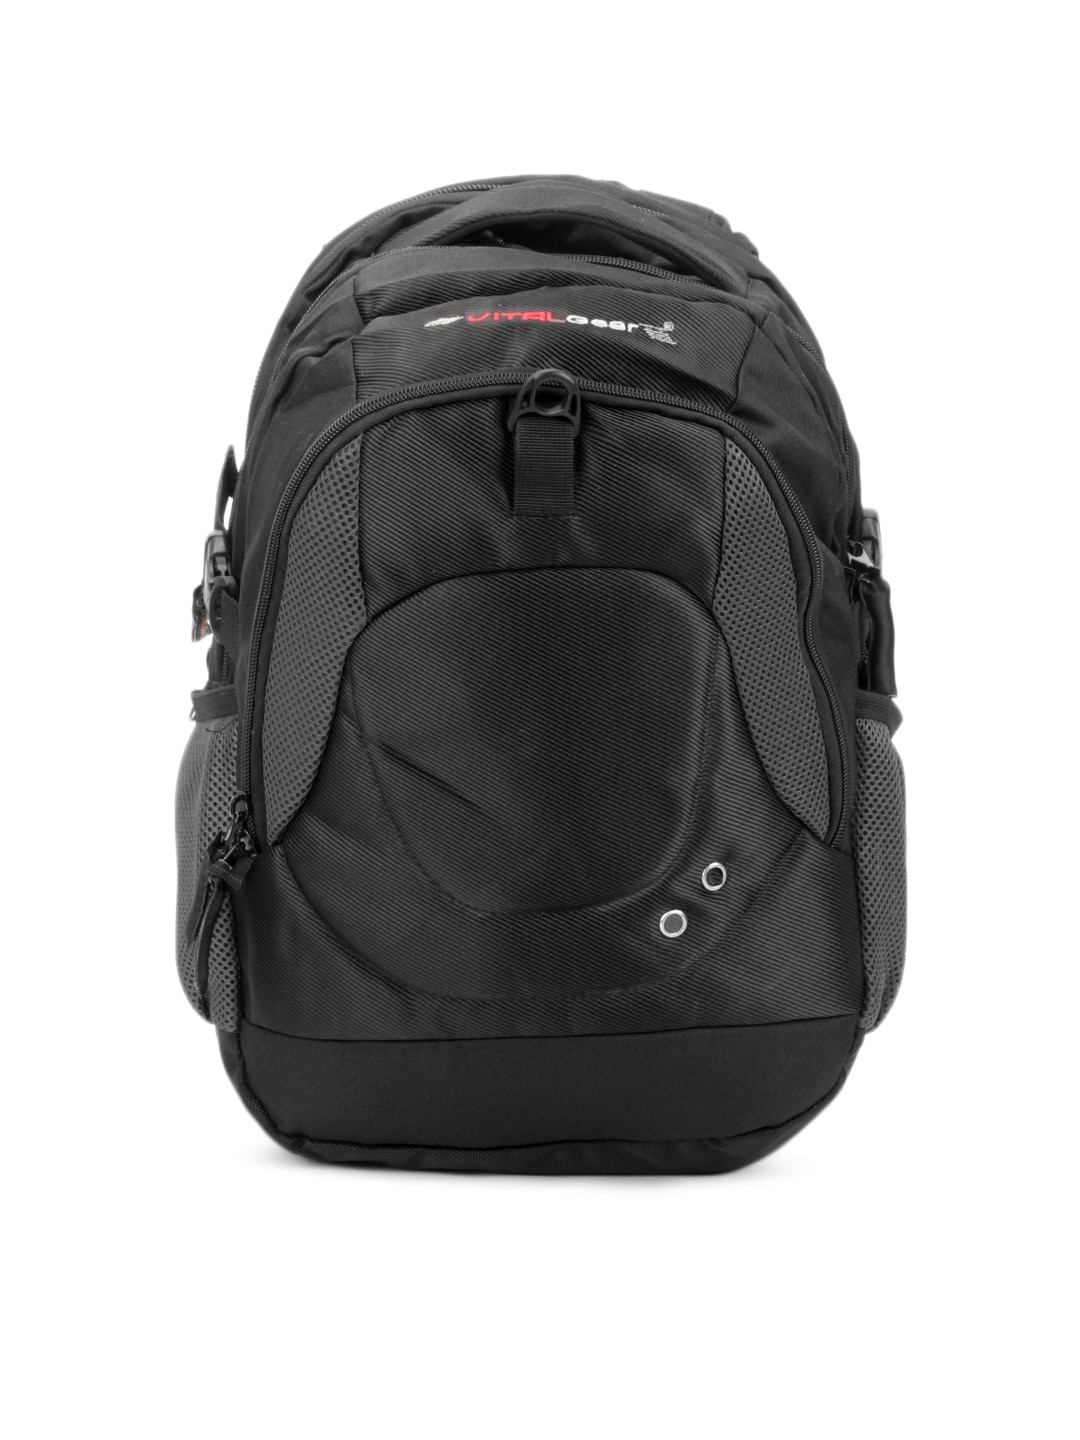 Vital Gear Unisex Techno Black Backpack